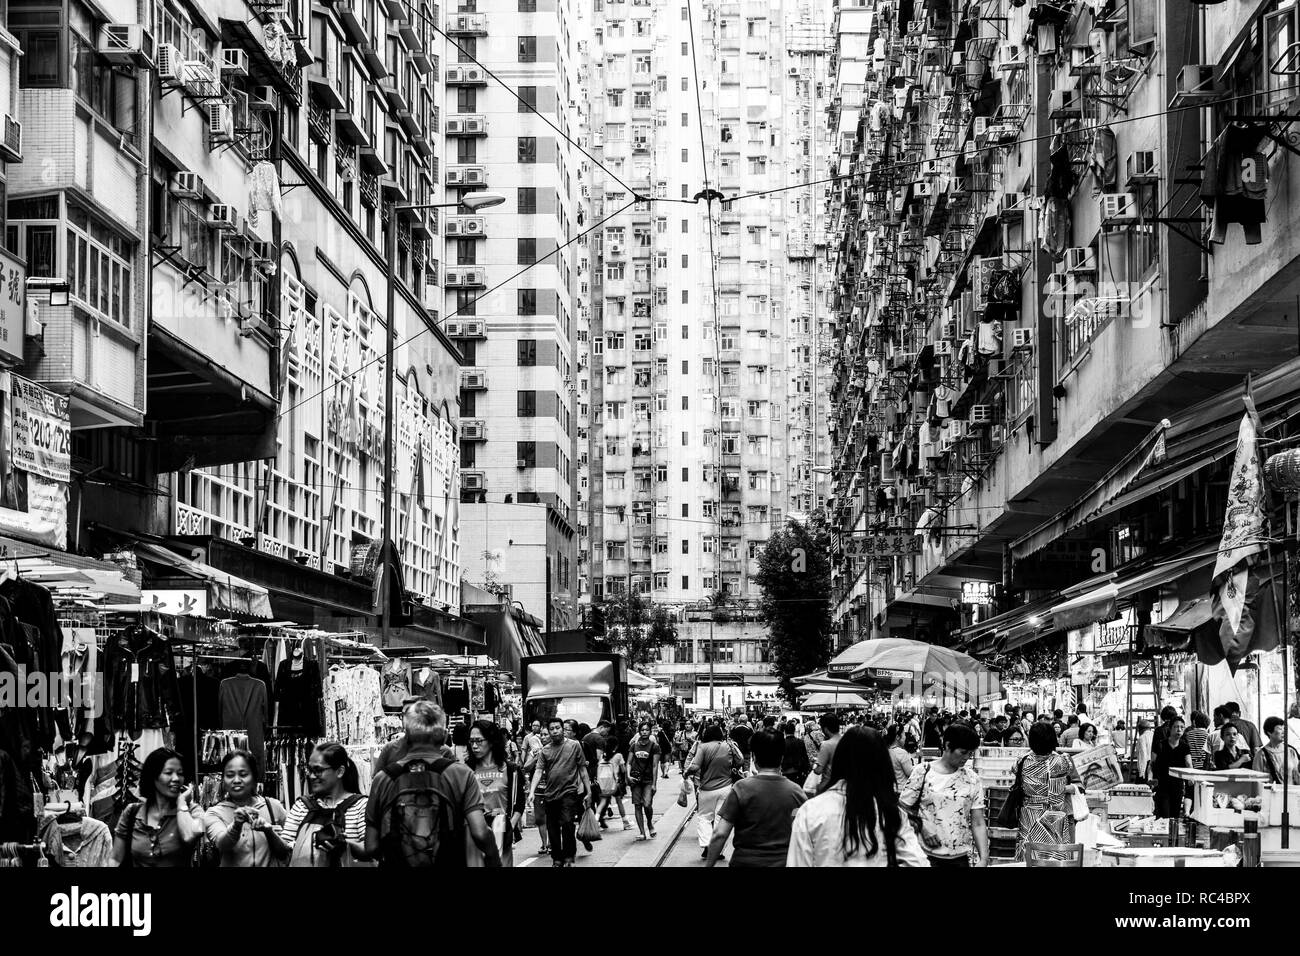 Hong Kong, China - October 13 2018: A large crowd walk in the Chun Yeung Street market in North Point in Hong Kong island through stall amid large apa Stock Photo